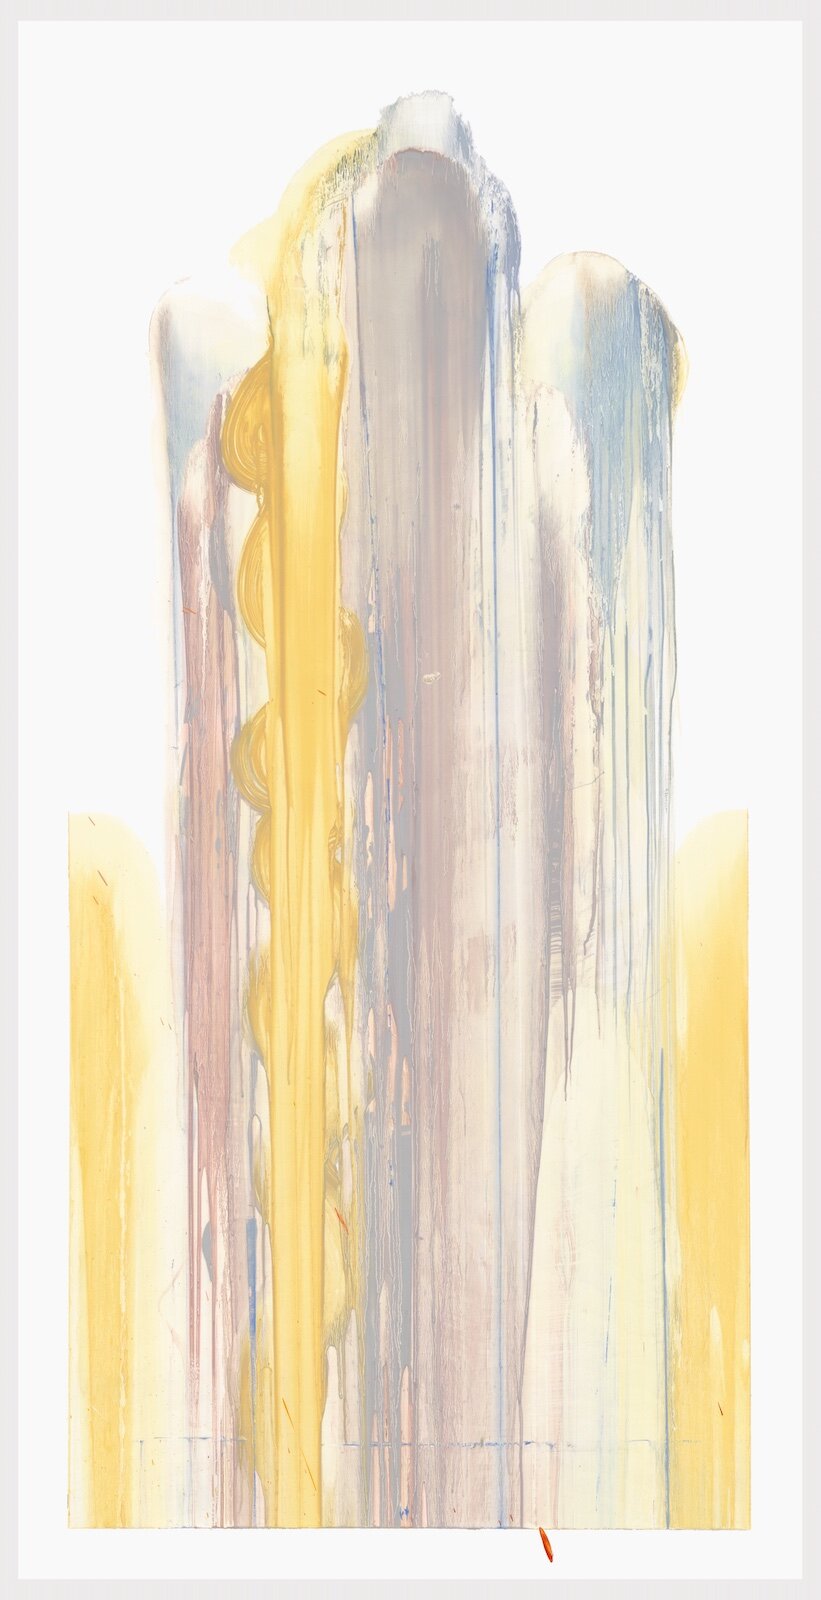    Melt Self Summer  , 2019  Oil on Yupo paper  60 x 36 in. 